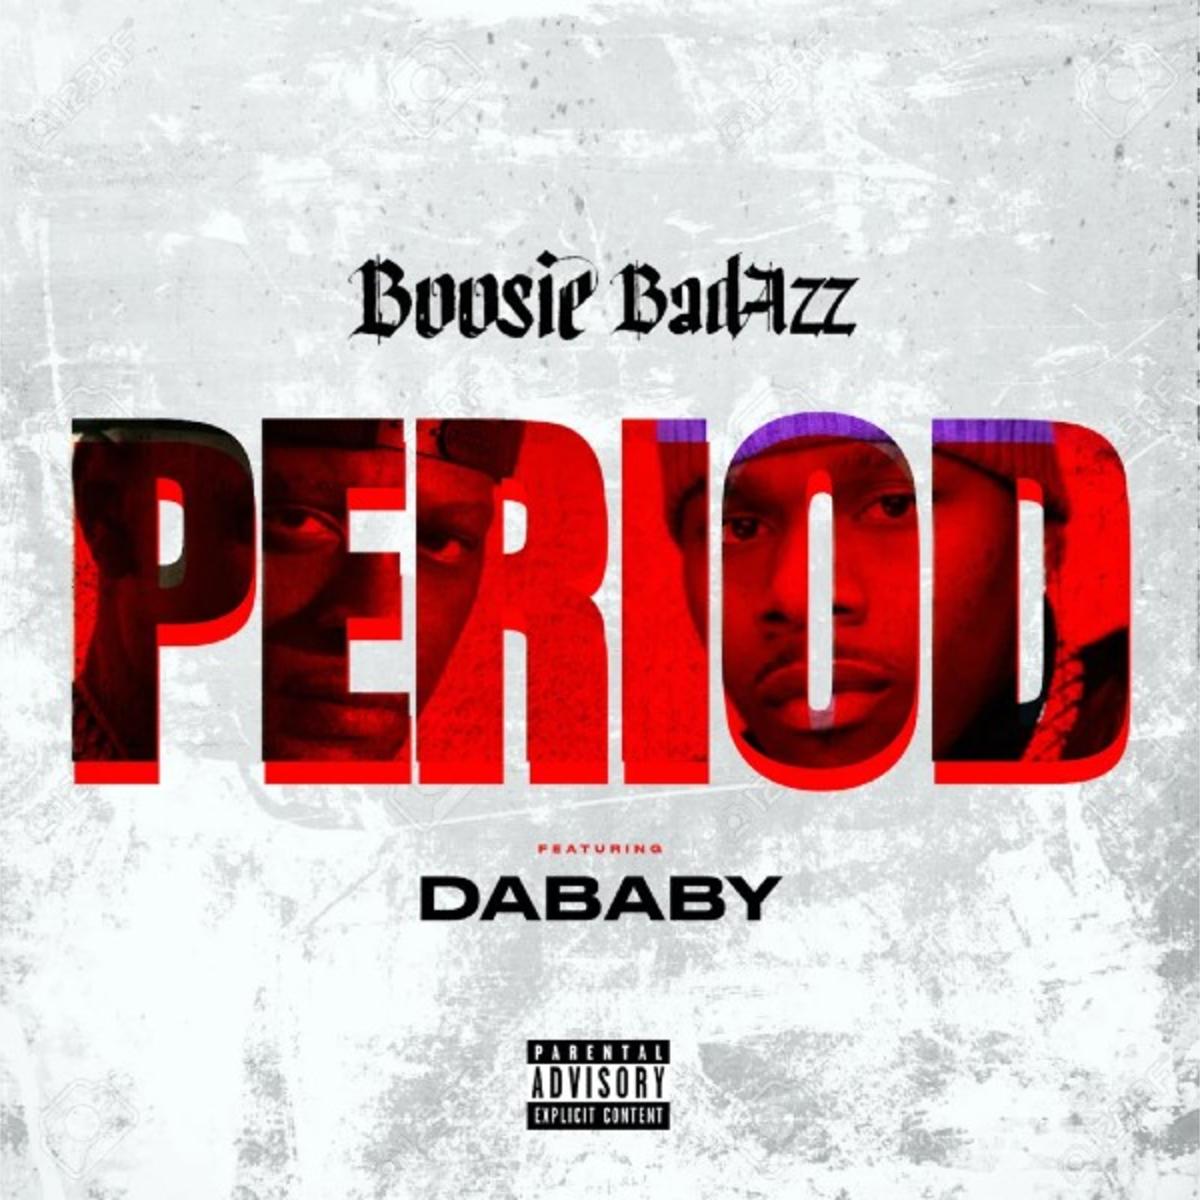 Boosie Badazz & DaBaby Sound Like Ultimate Villains In “Period”